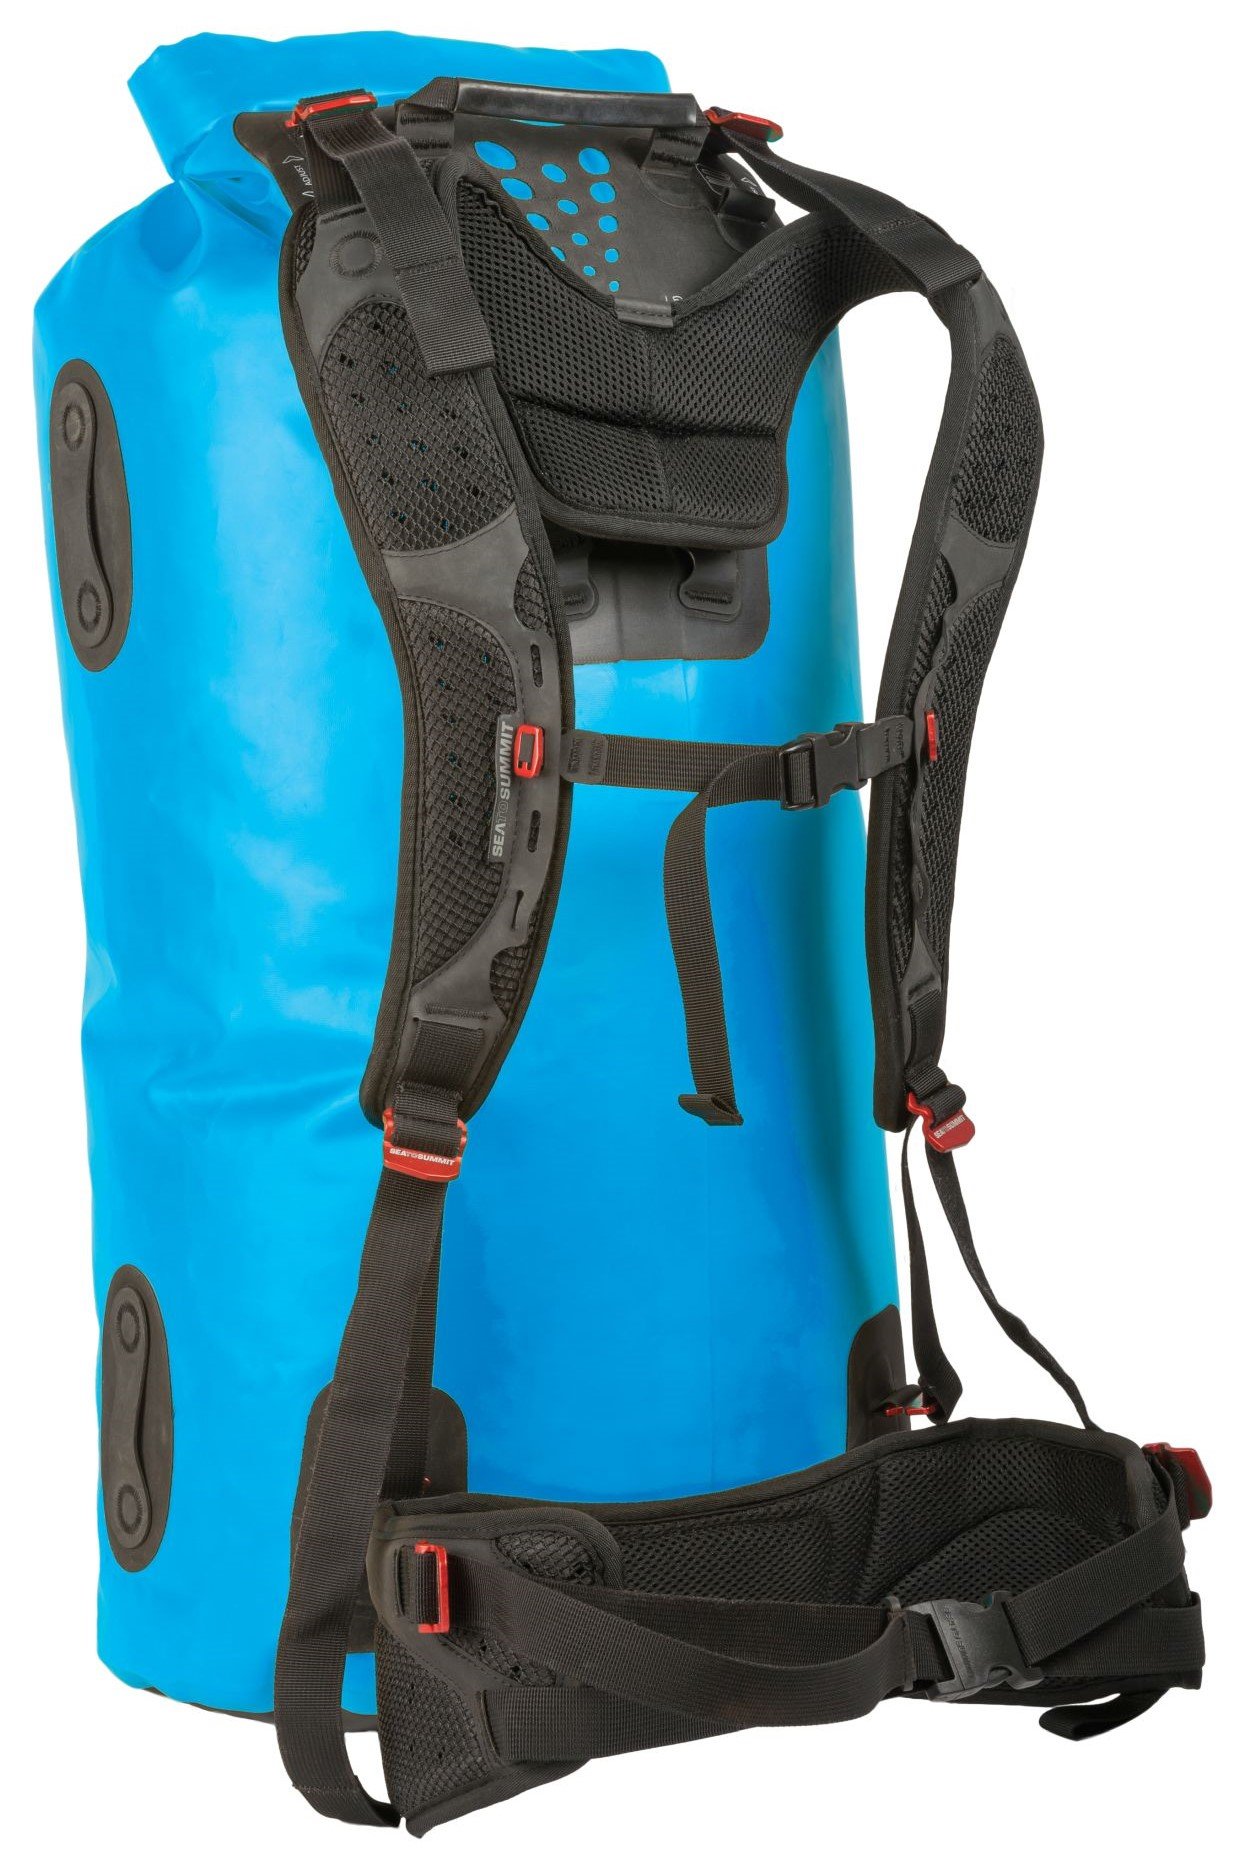 Sea To Summit Hydraulic Dry Pack Harness 35L